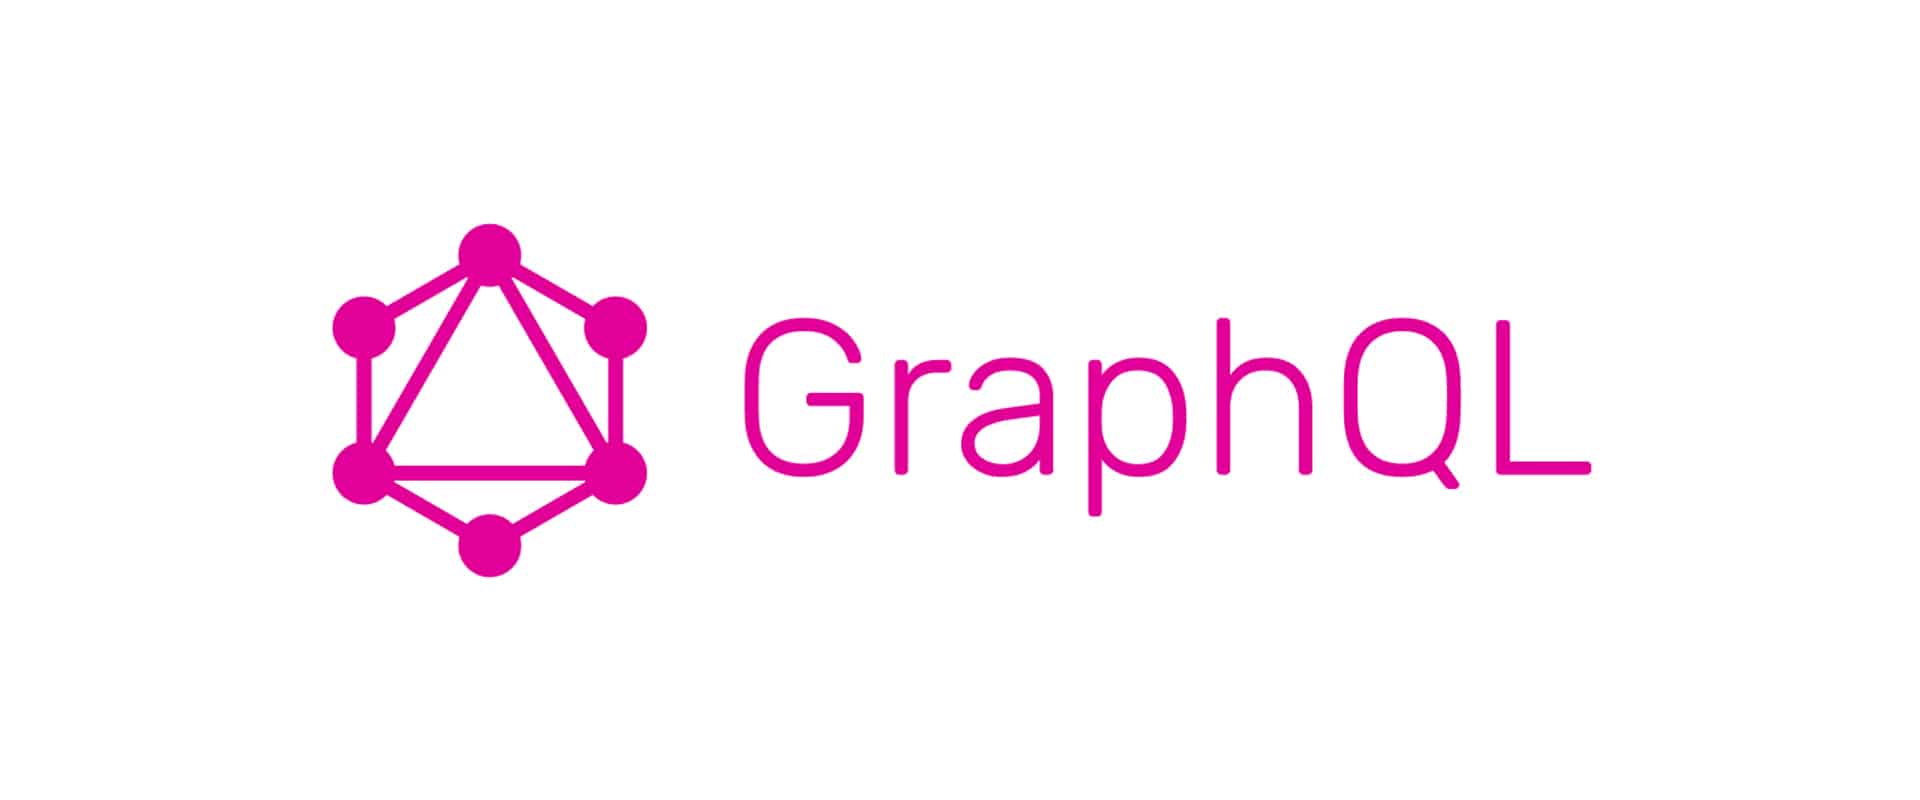 GraphQL